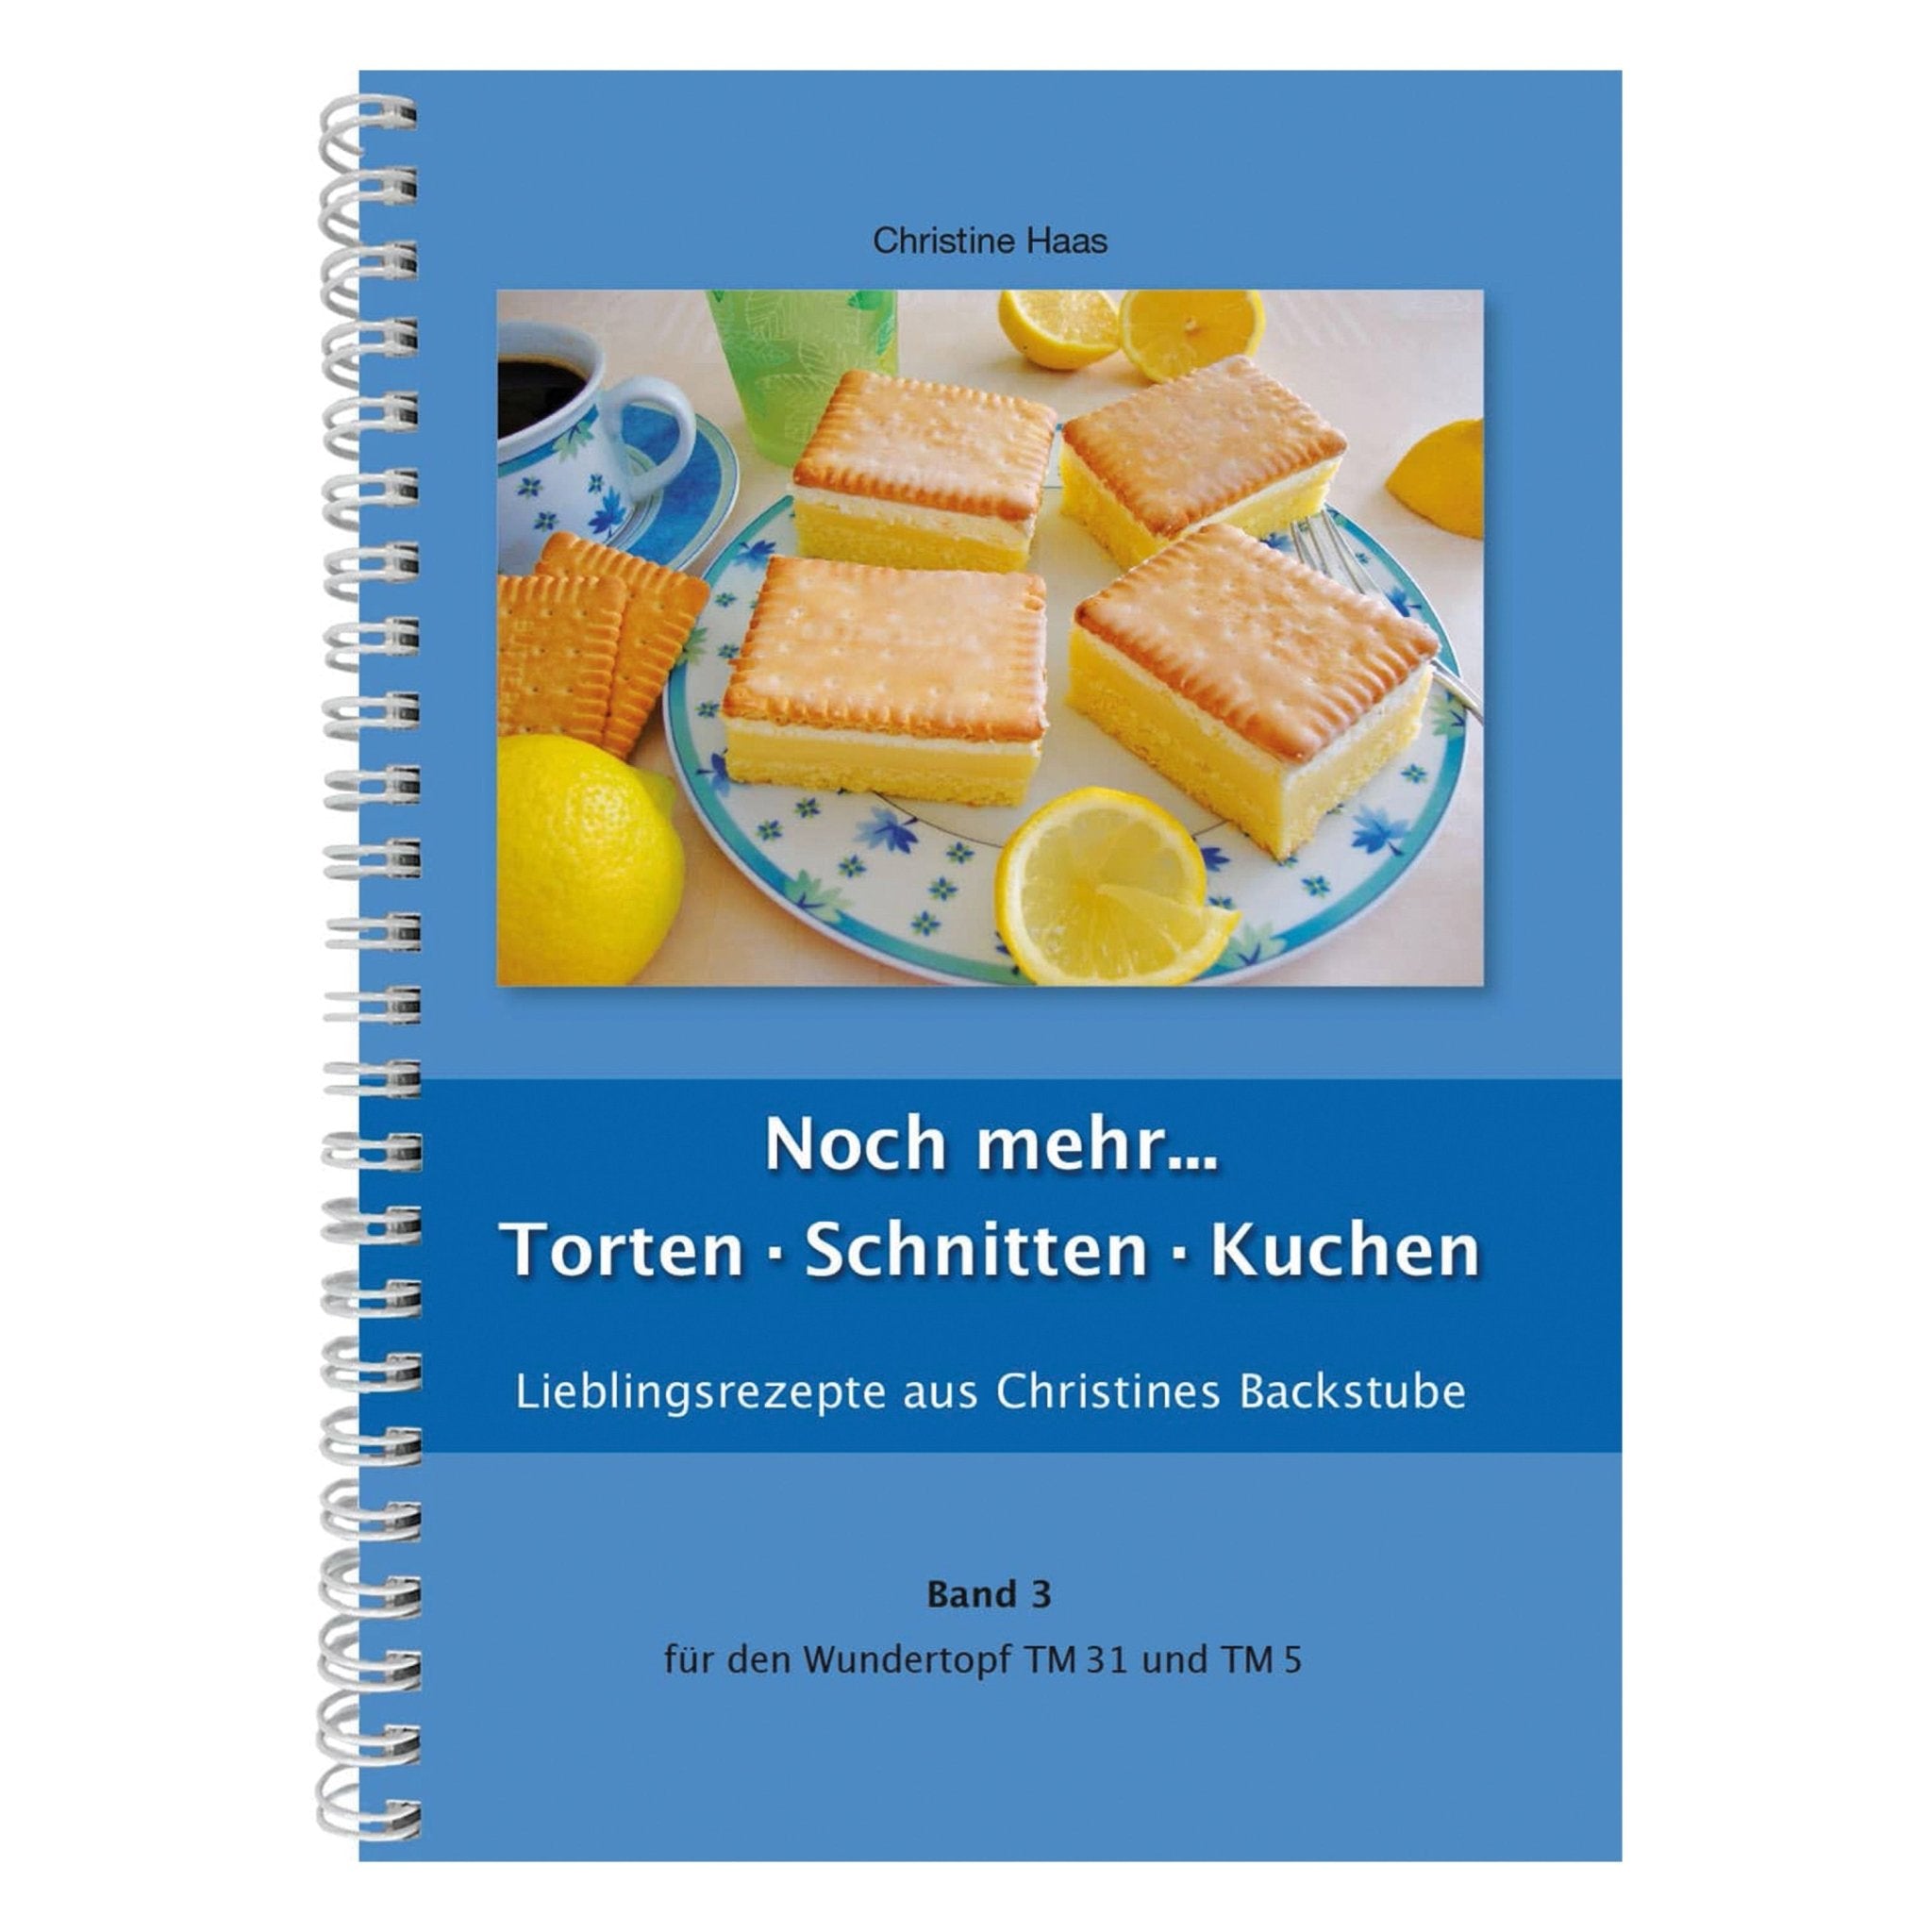 Noch mehr Torten, Schnitten, Kuchen | Christine Haas | Band 3 - Wundermix GmbH